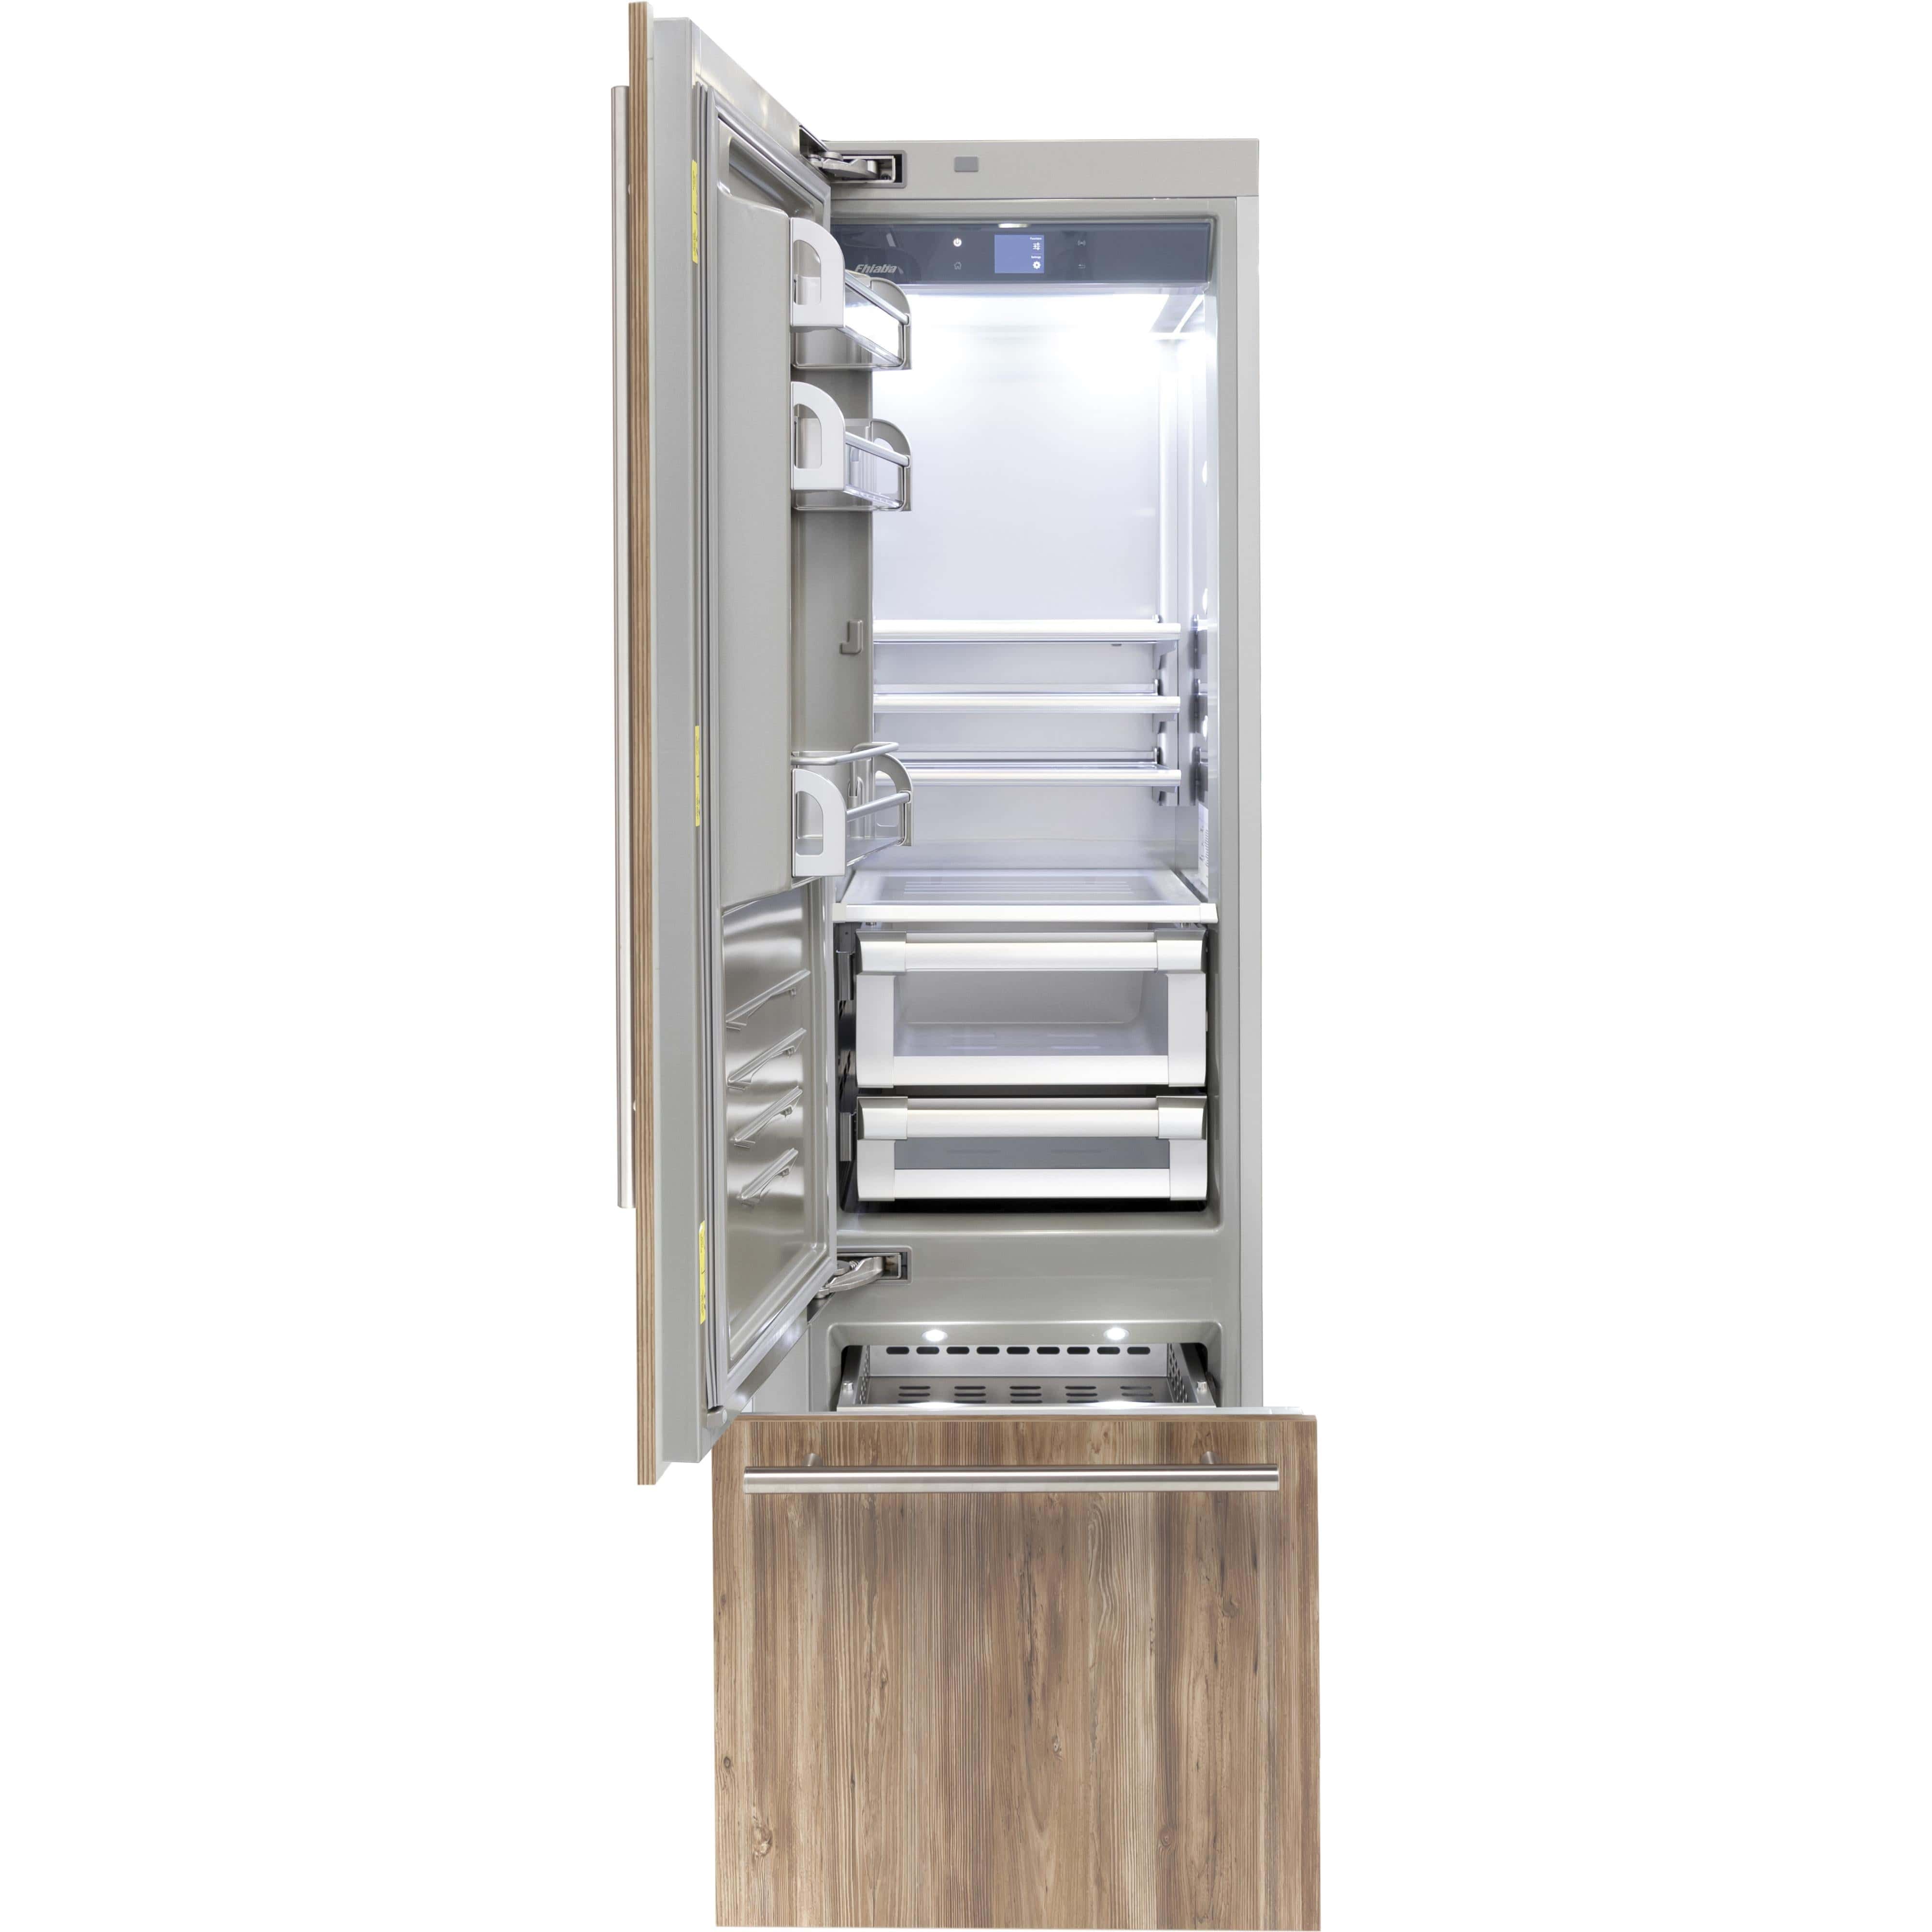 Fhiaba 24-inch, 11.58 cu. ft. Bottom Freezer Refrigerator FI24B-LO1 Refrigerators FI24BLO1 Luxury Appliances Direct